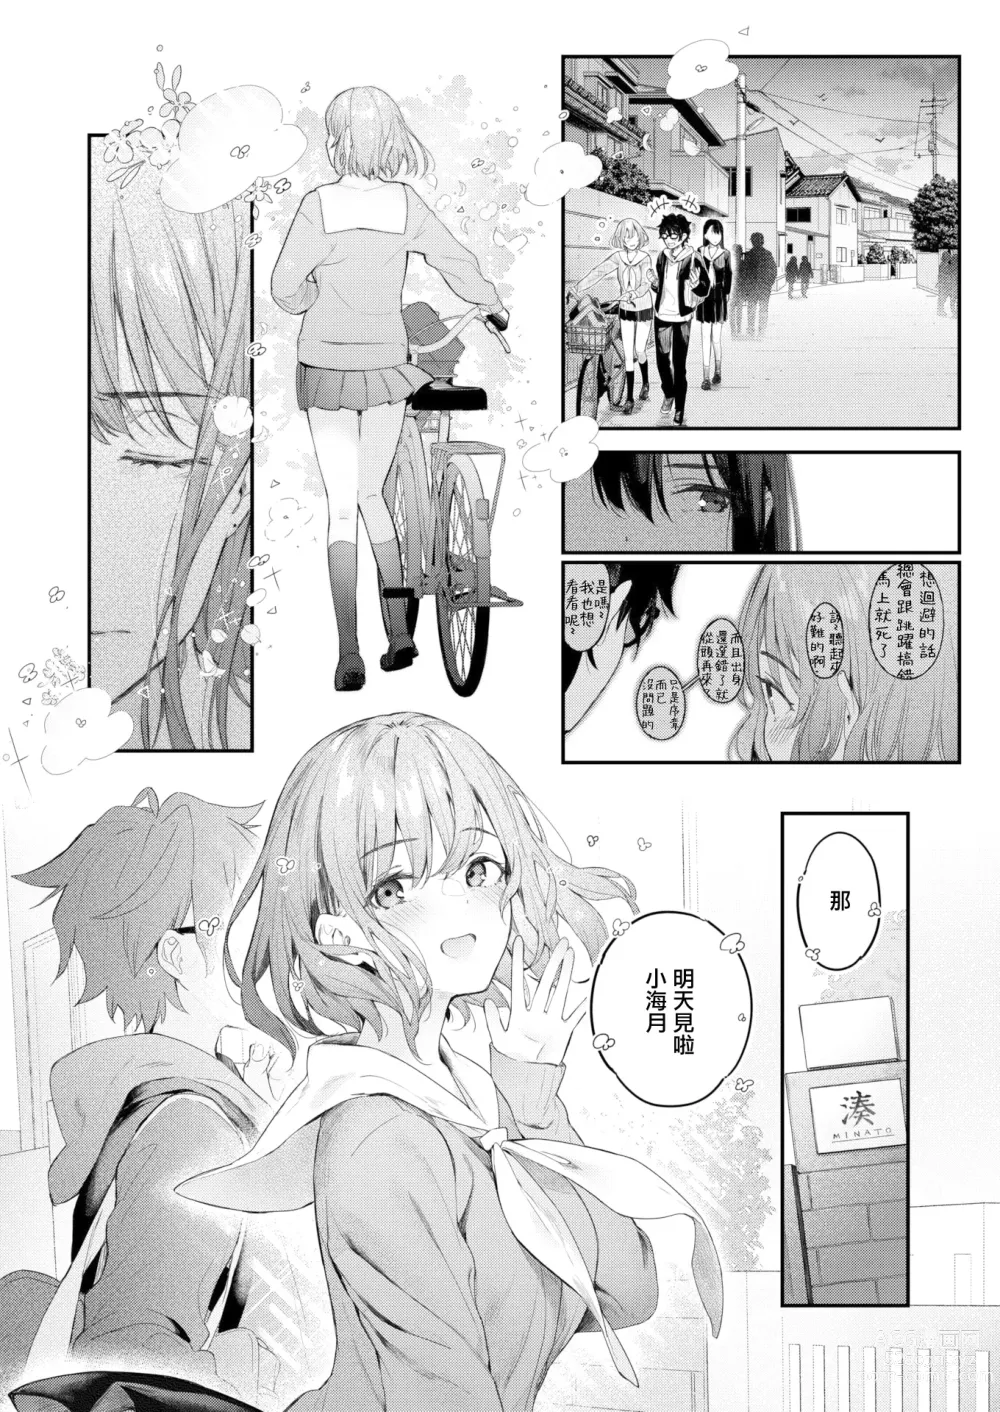 Page 6 of manga Watashi no Kirai na Hito (uncensored)